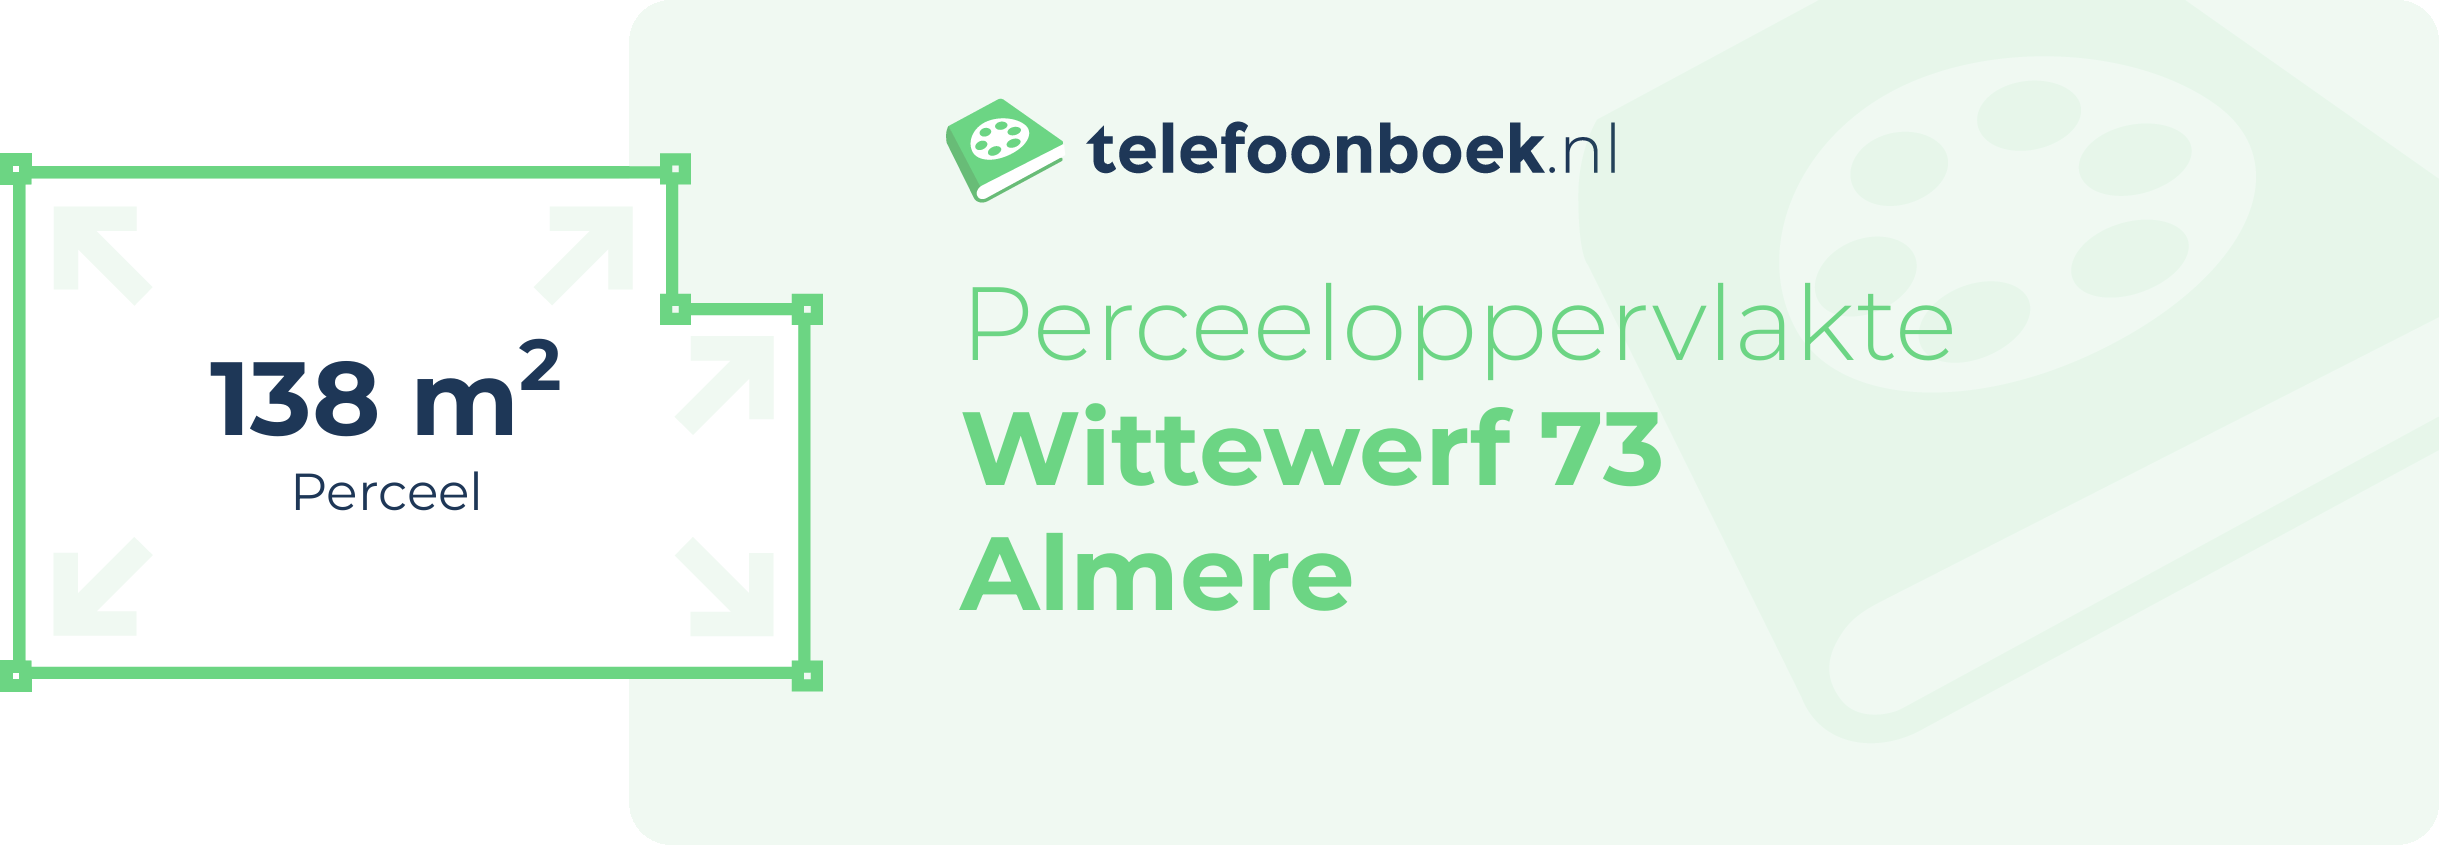 Perceeloppervlakte Wittewerf 73 Almere